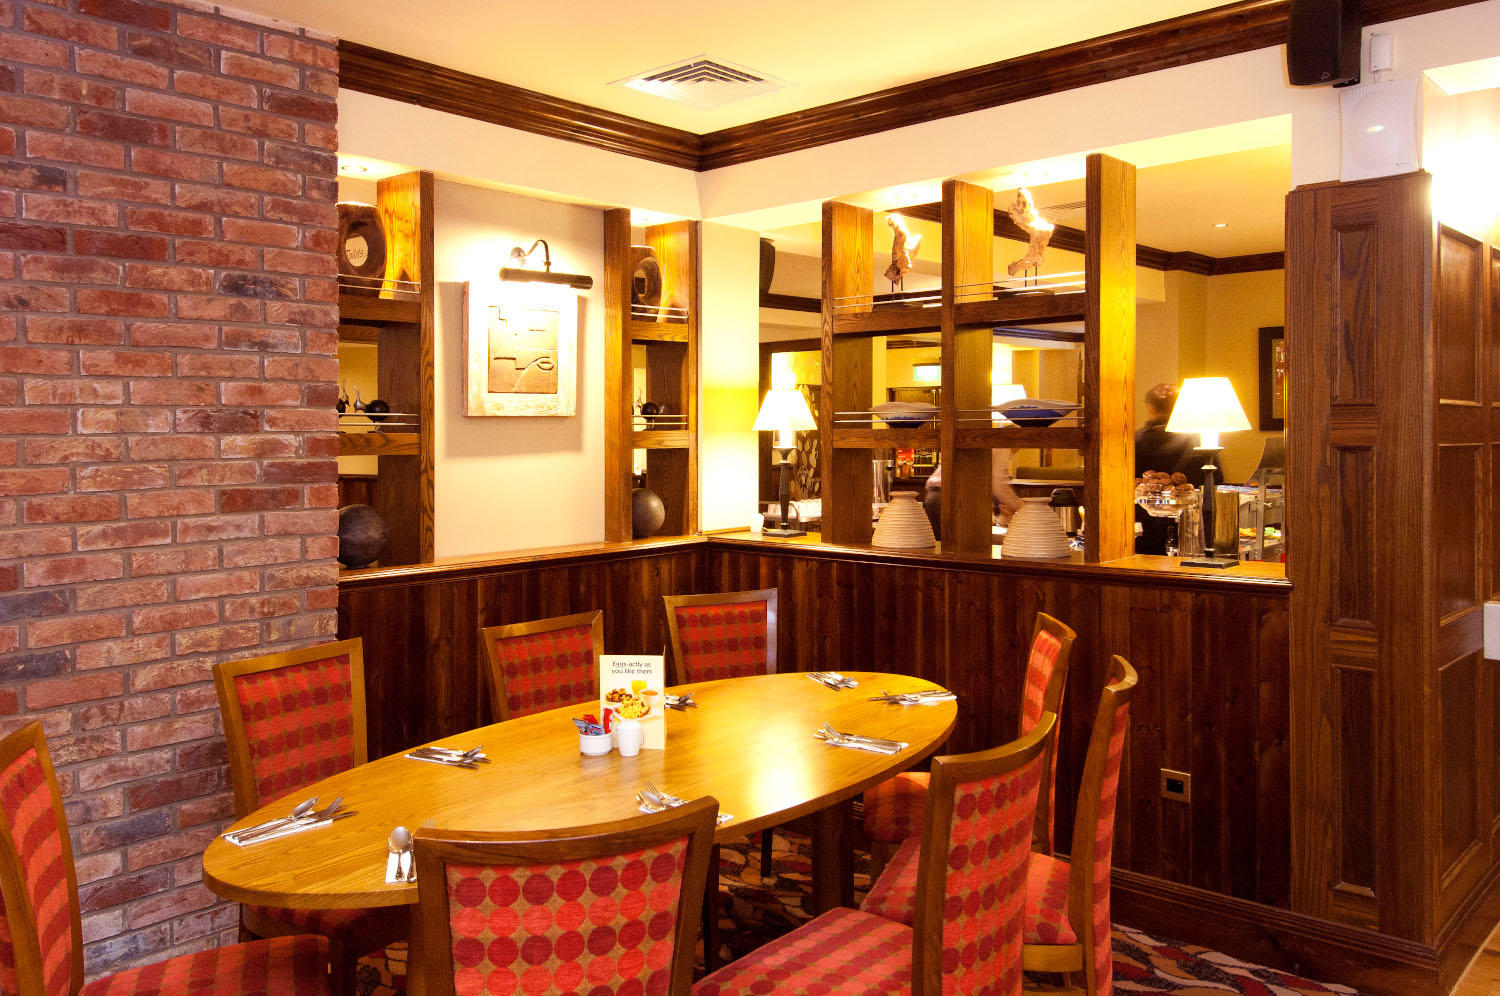 Brewers Fayre restaurant interior Premier Inn Scarborough (South Bay) hotel Scarborough 03333 219228